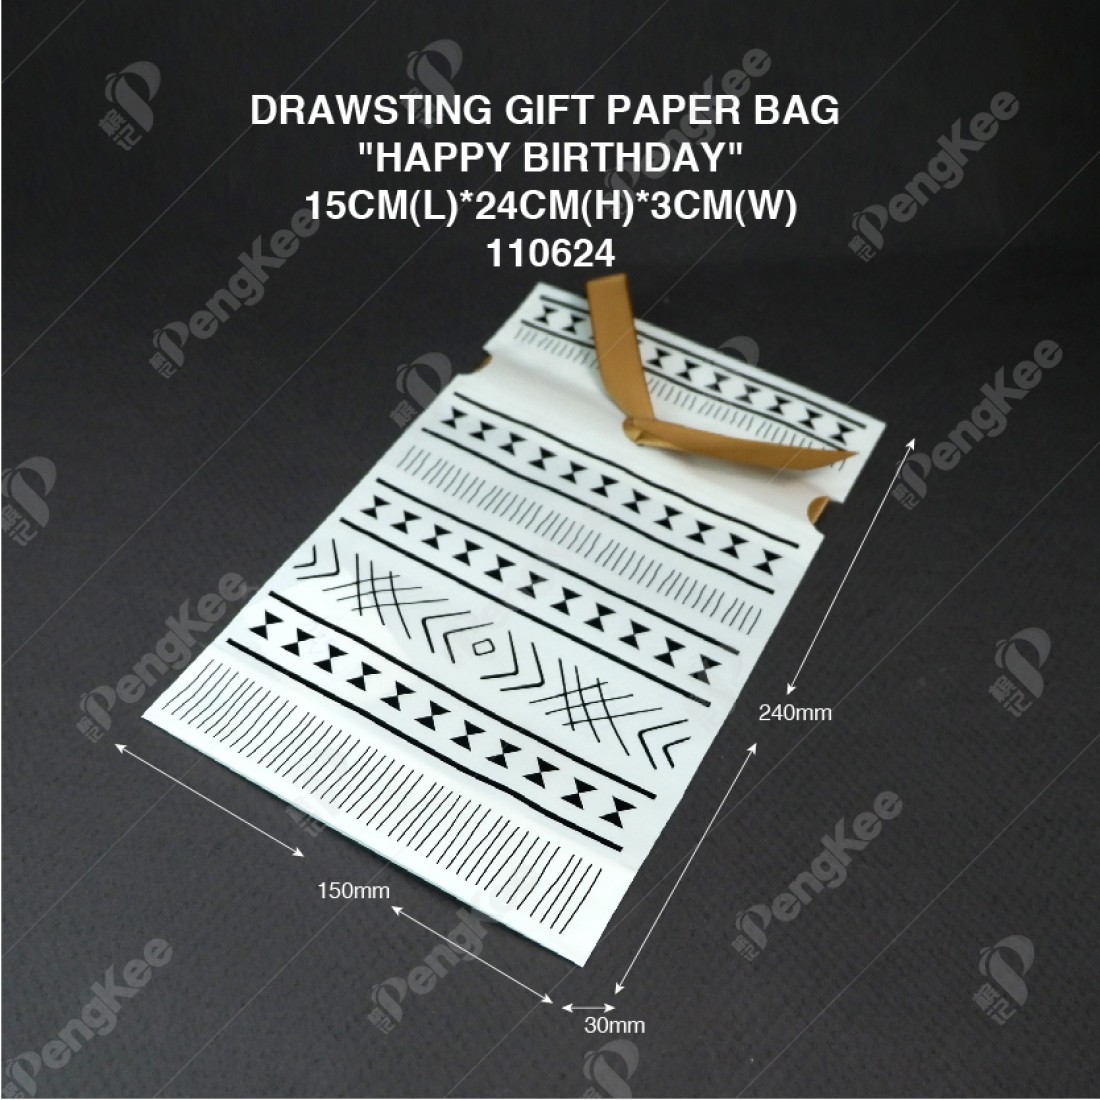 DRAWSTING GIFT PAPER BAG "HAPPY BIRTHDAY"15CM(L)*24CM(H)*3CM(W)(CM)50'S